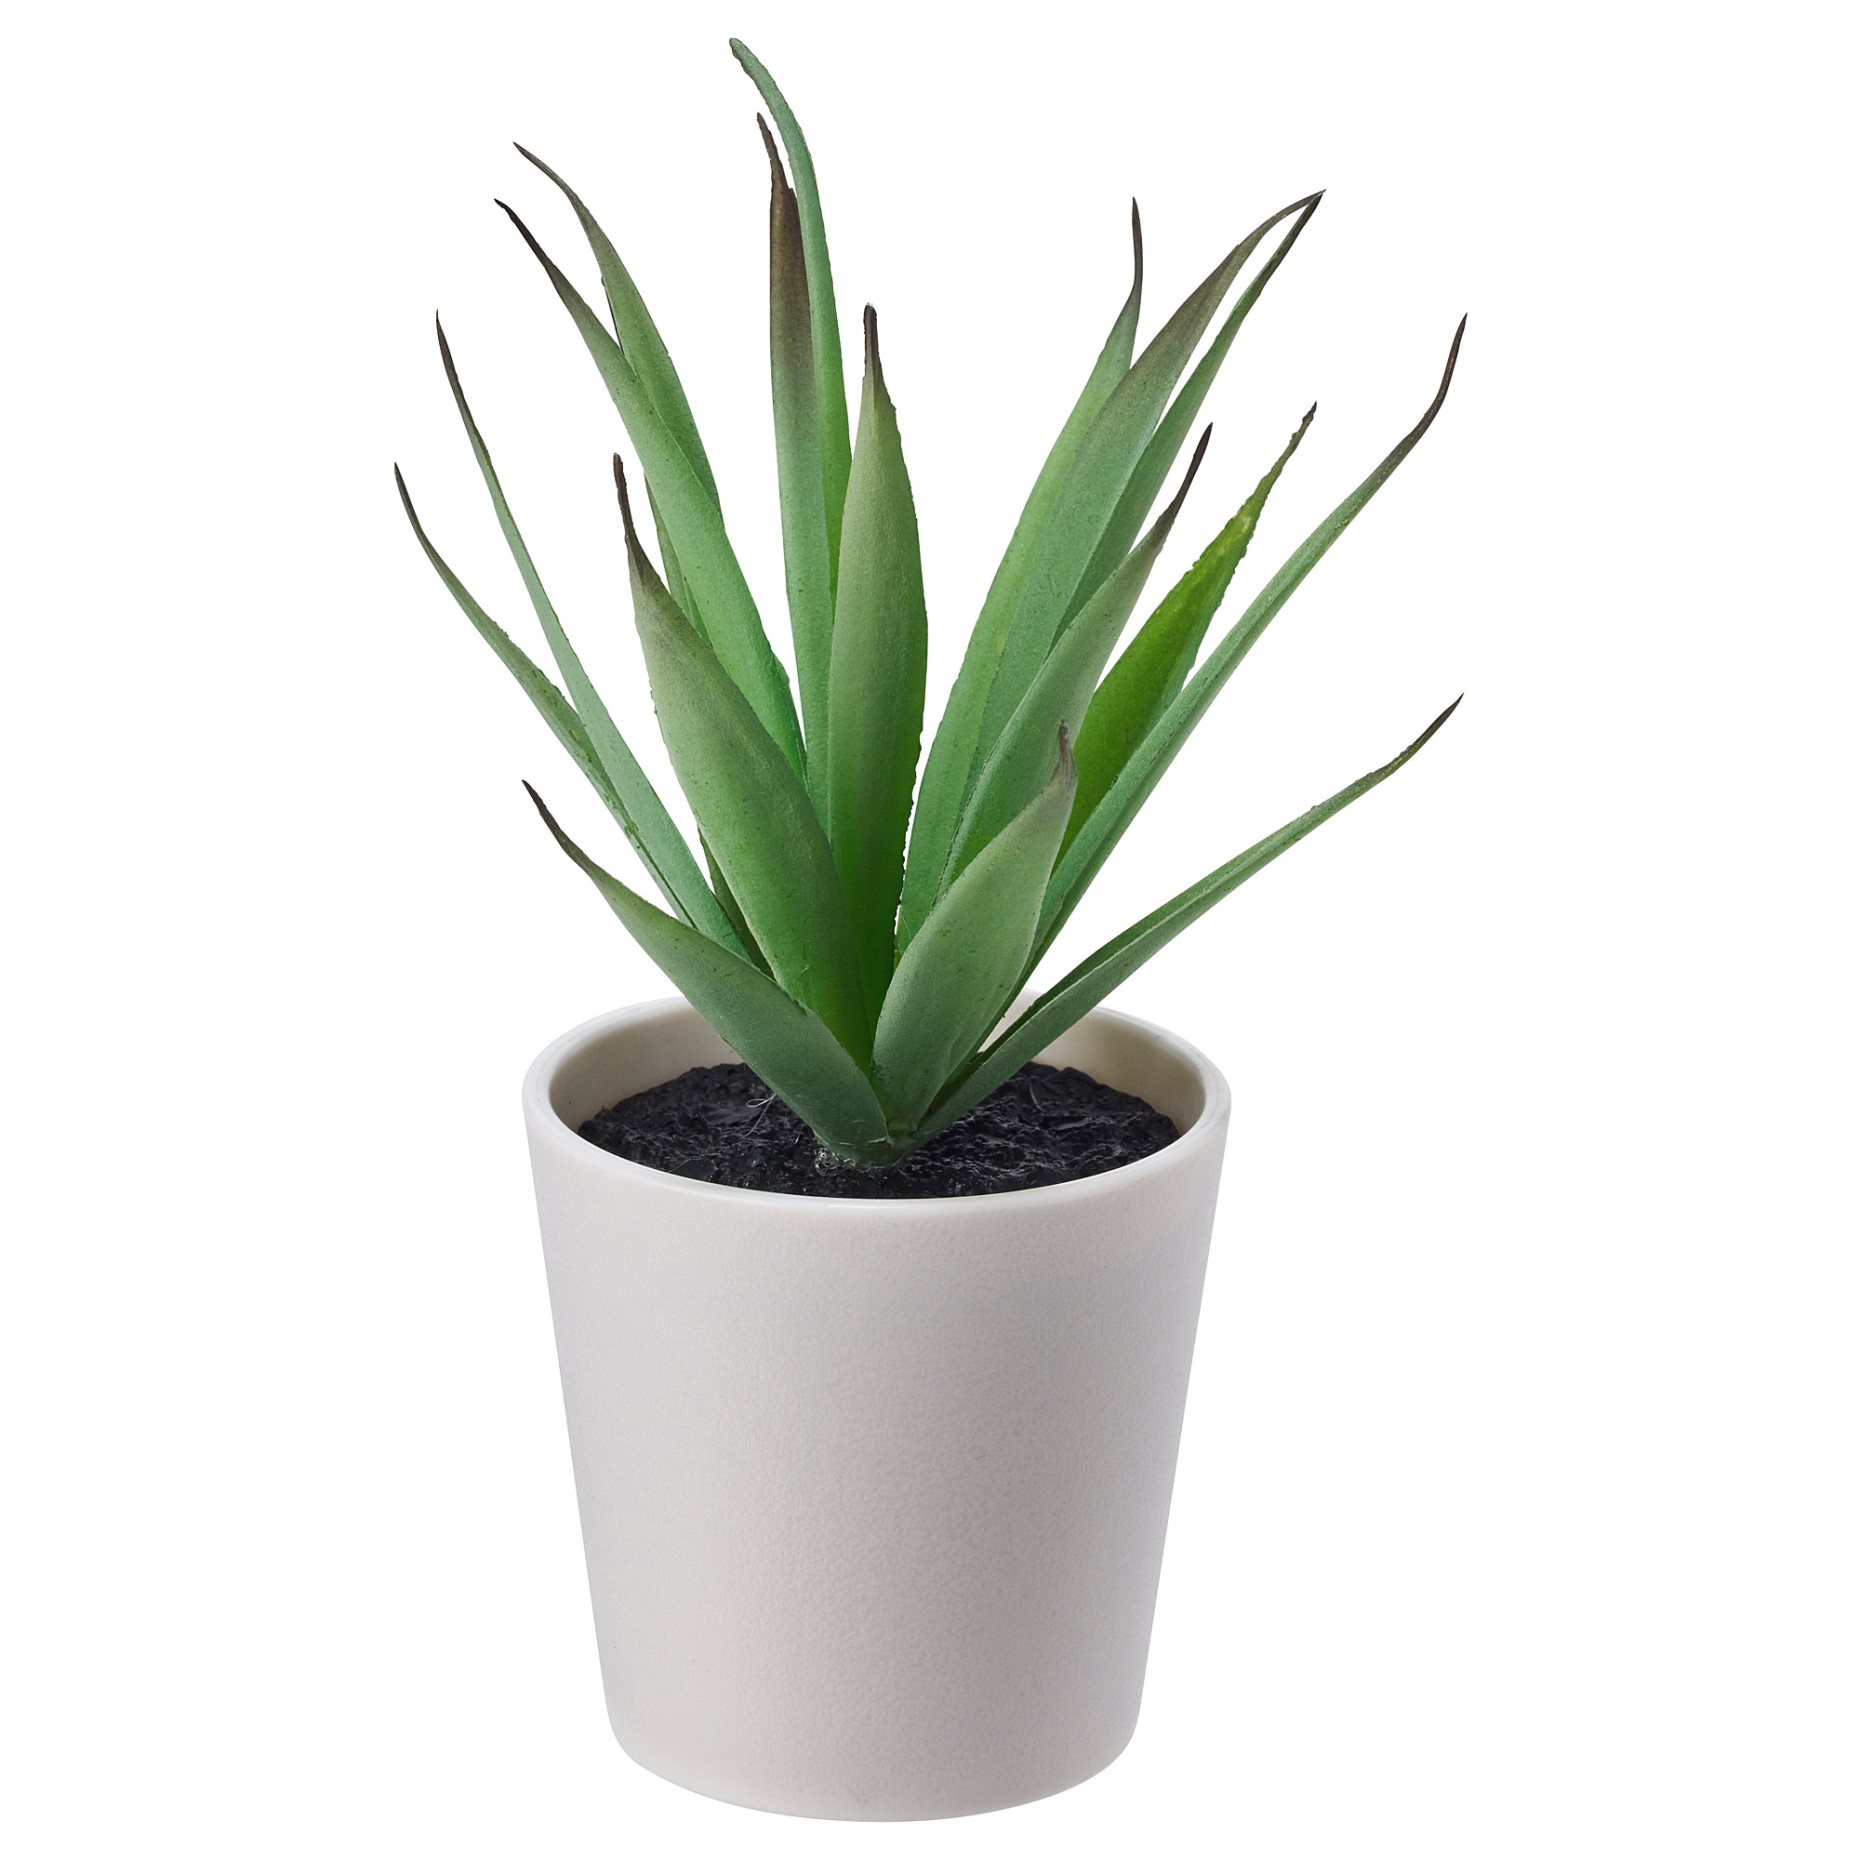 FEJKA, τεχνητό φυτό σε γλάστρα εσωτερικού/εξωτερικού χώρου Παχύφυτο, 6 cm, 805.197.67